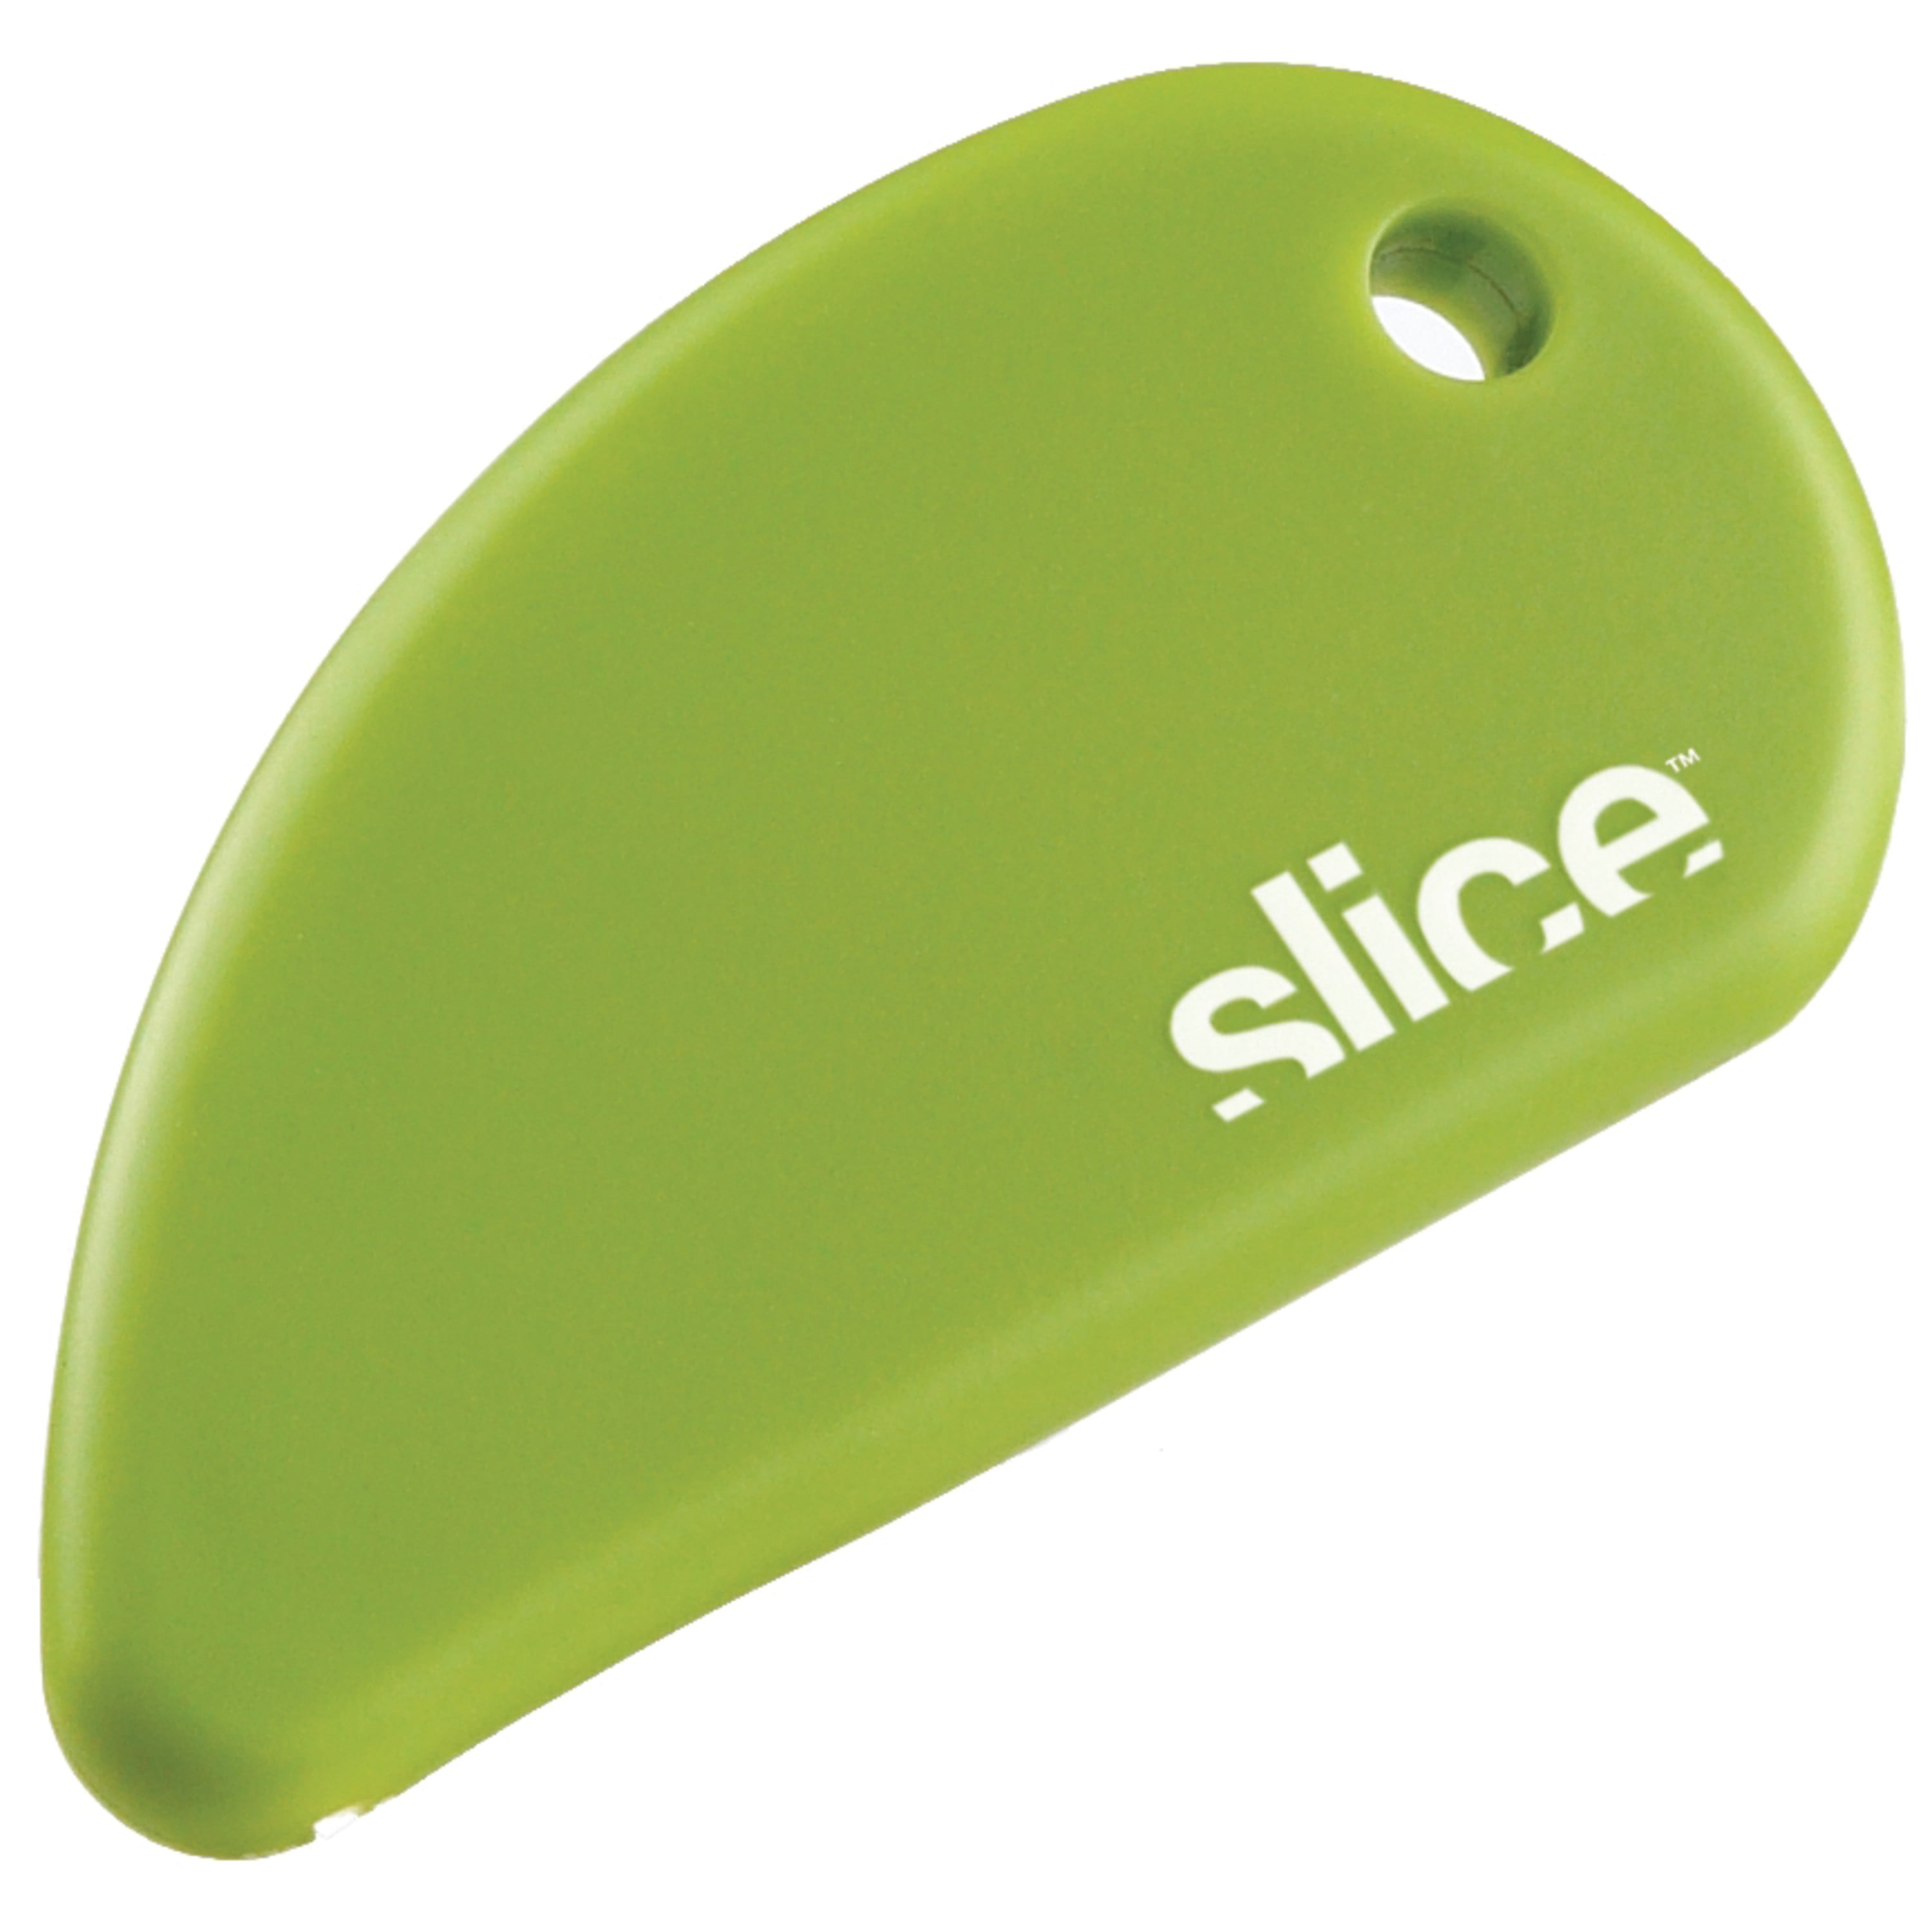 Slice Ceramic Safety Cutter, 2.25 x 1.25